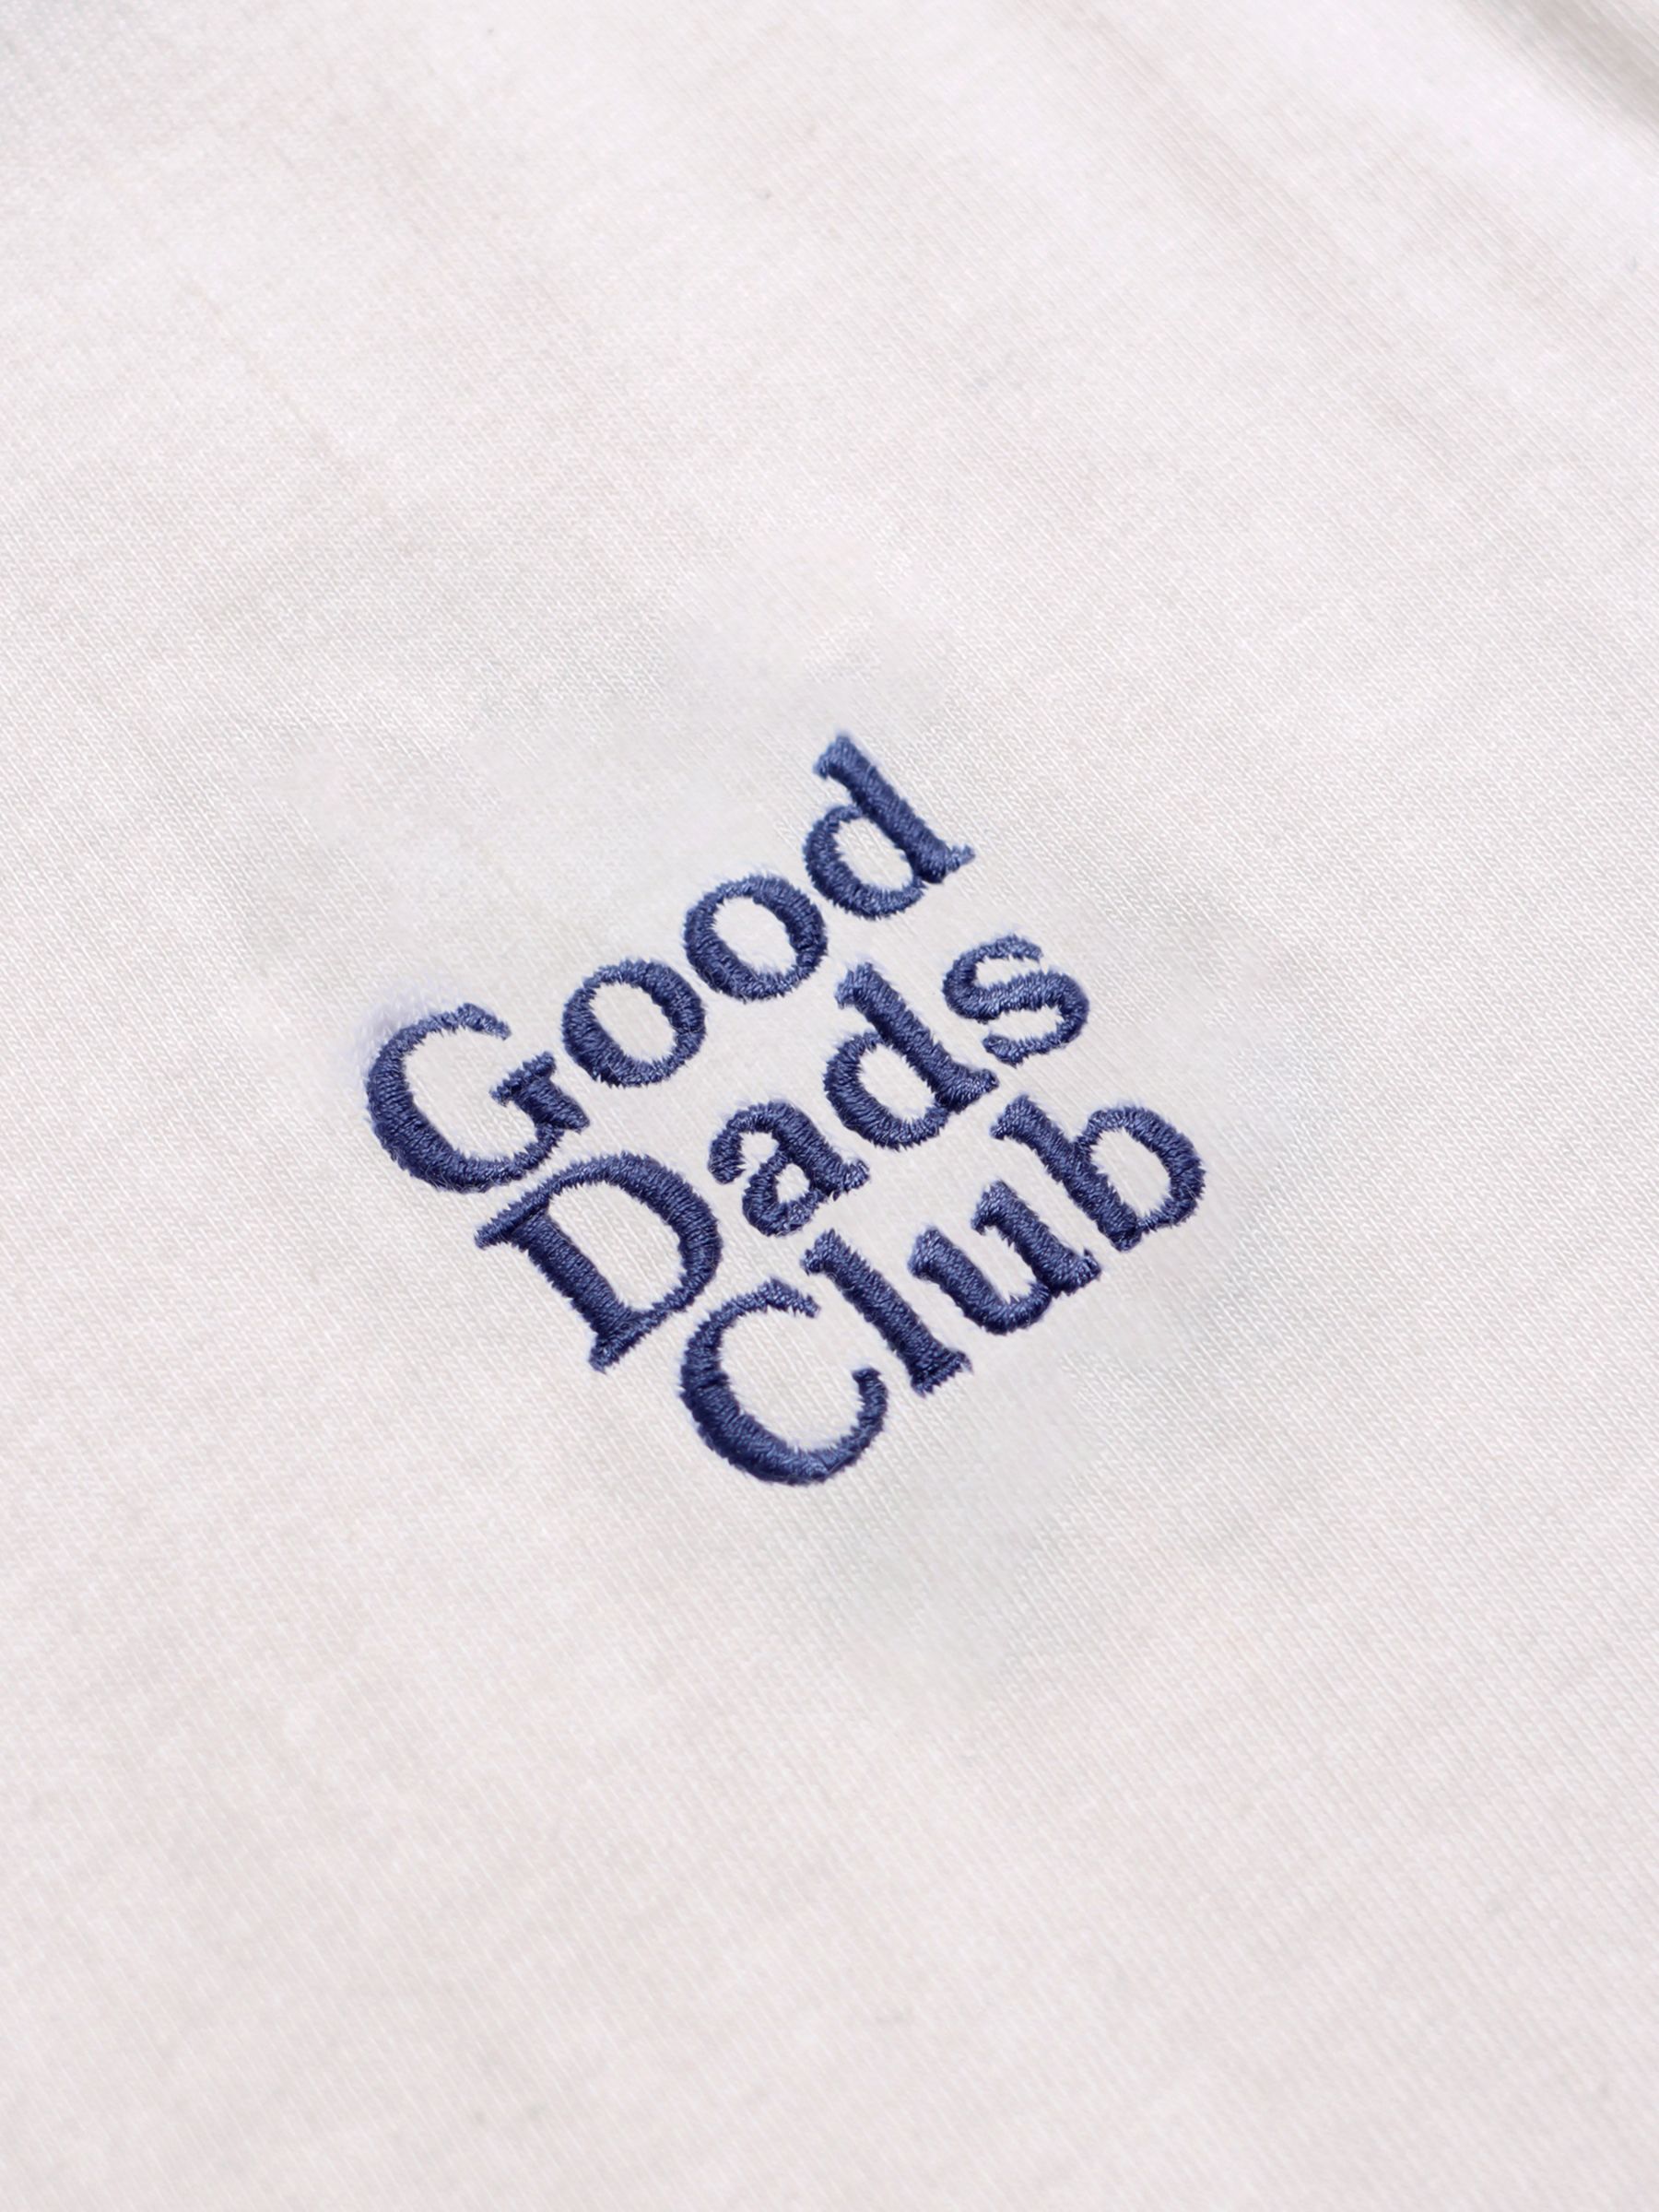 Знак far на футболке. Daddy club